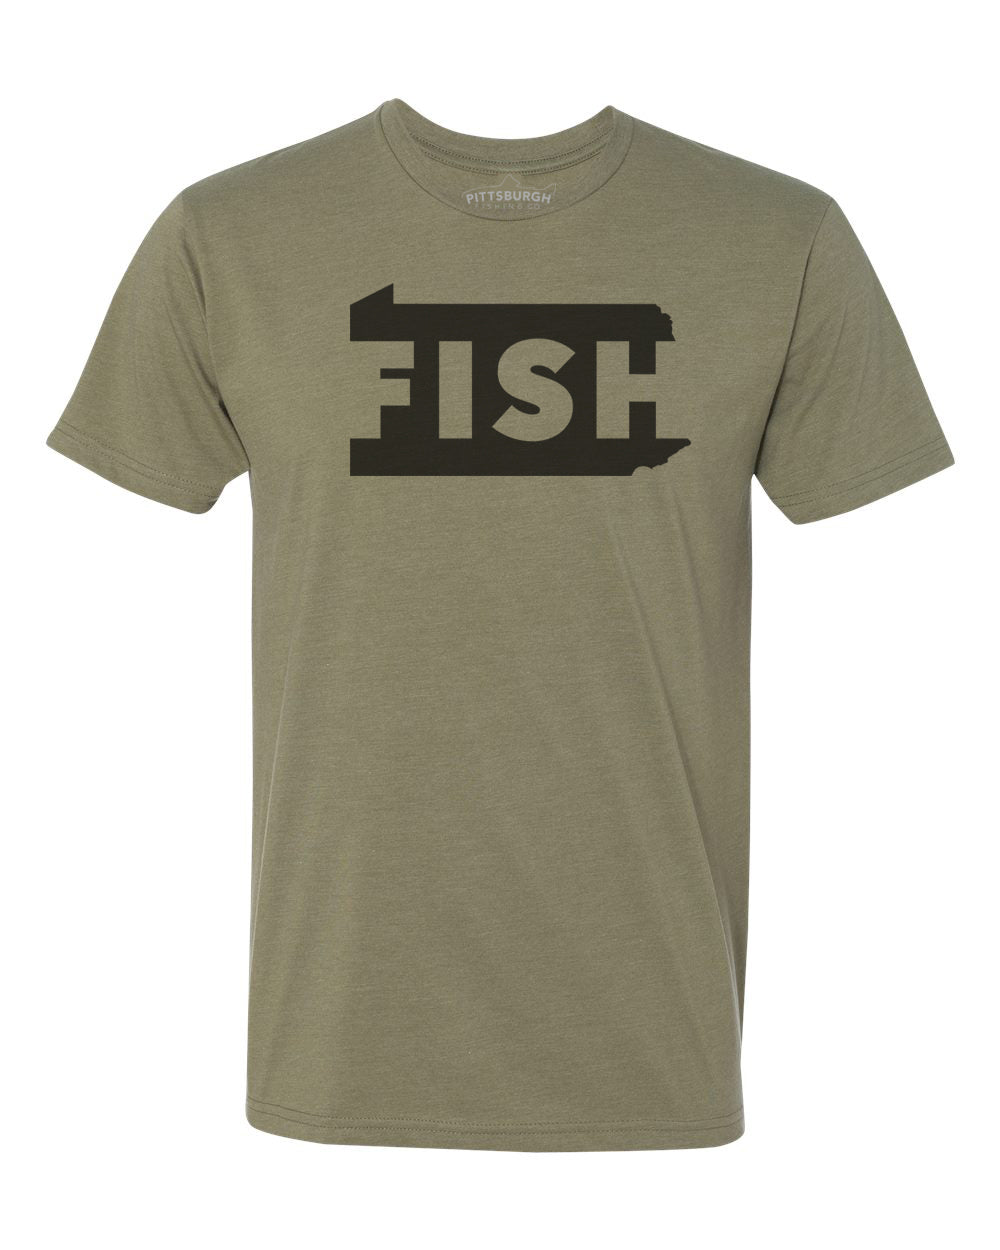 FISH Pennsylvania T Shirt - Olive Green